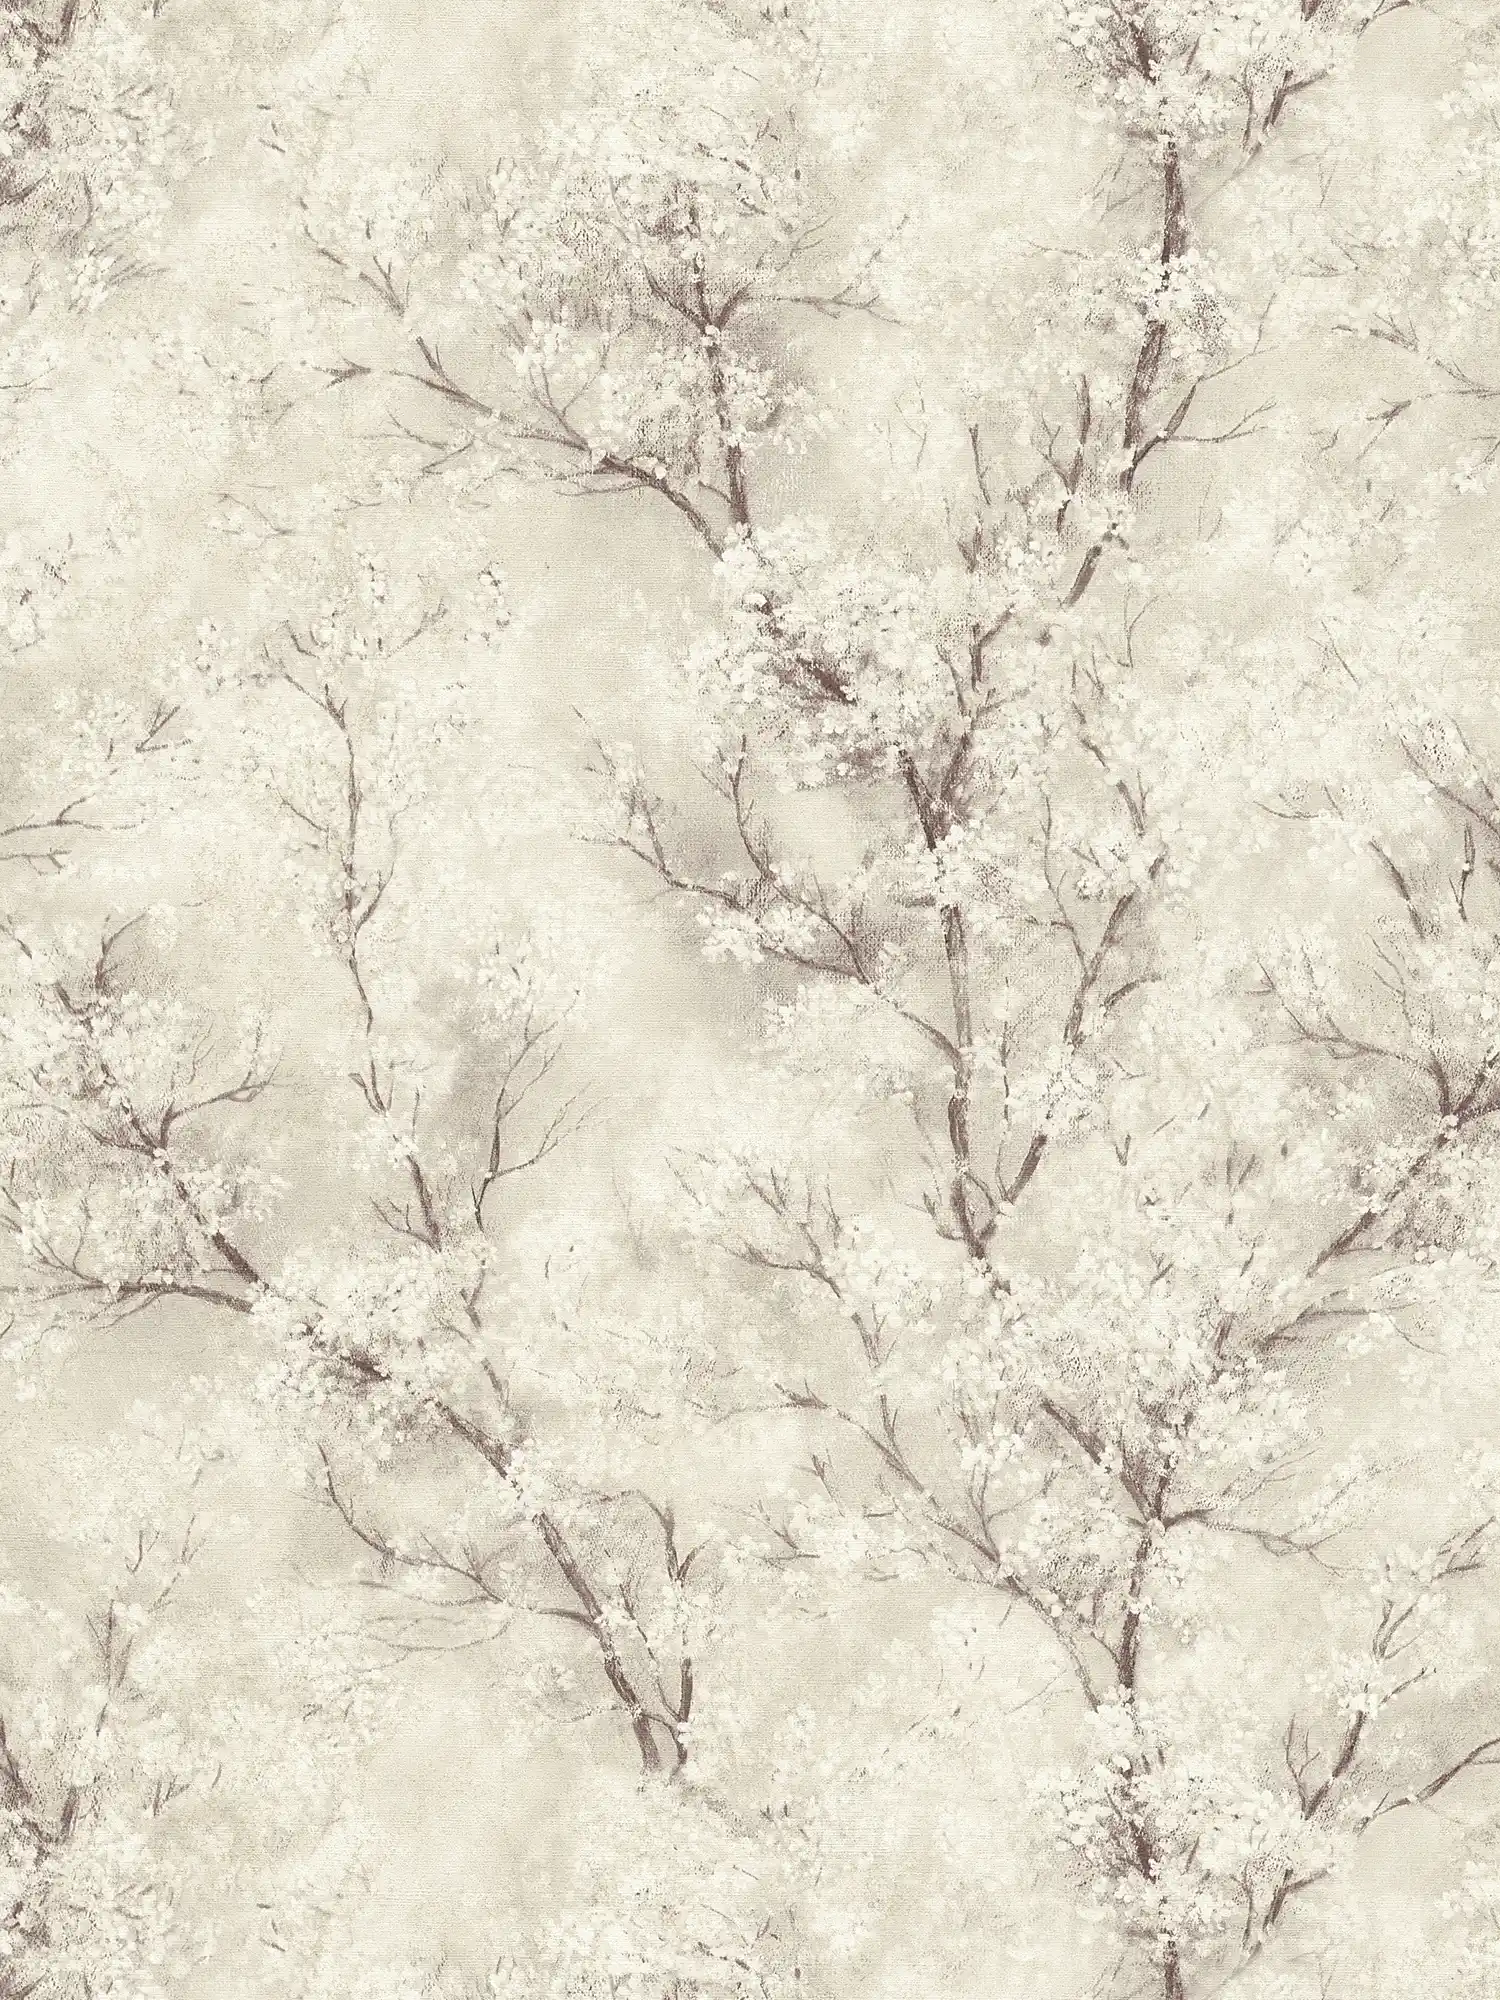         wallpaper cherry blossoms glitter effect - cream, grey, white
    